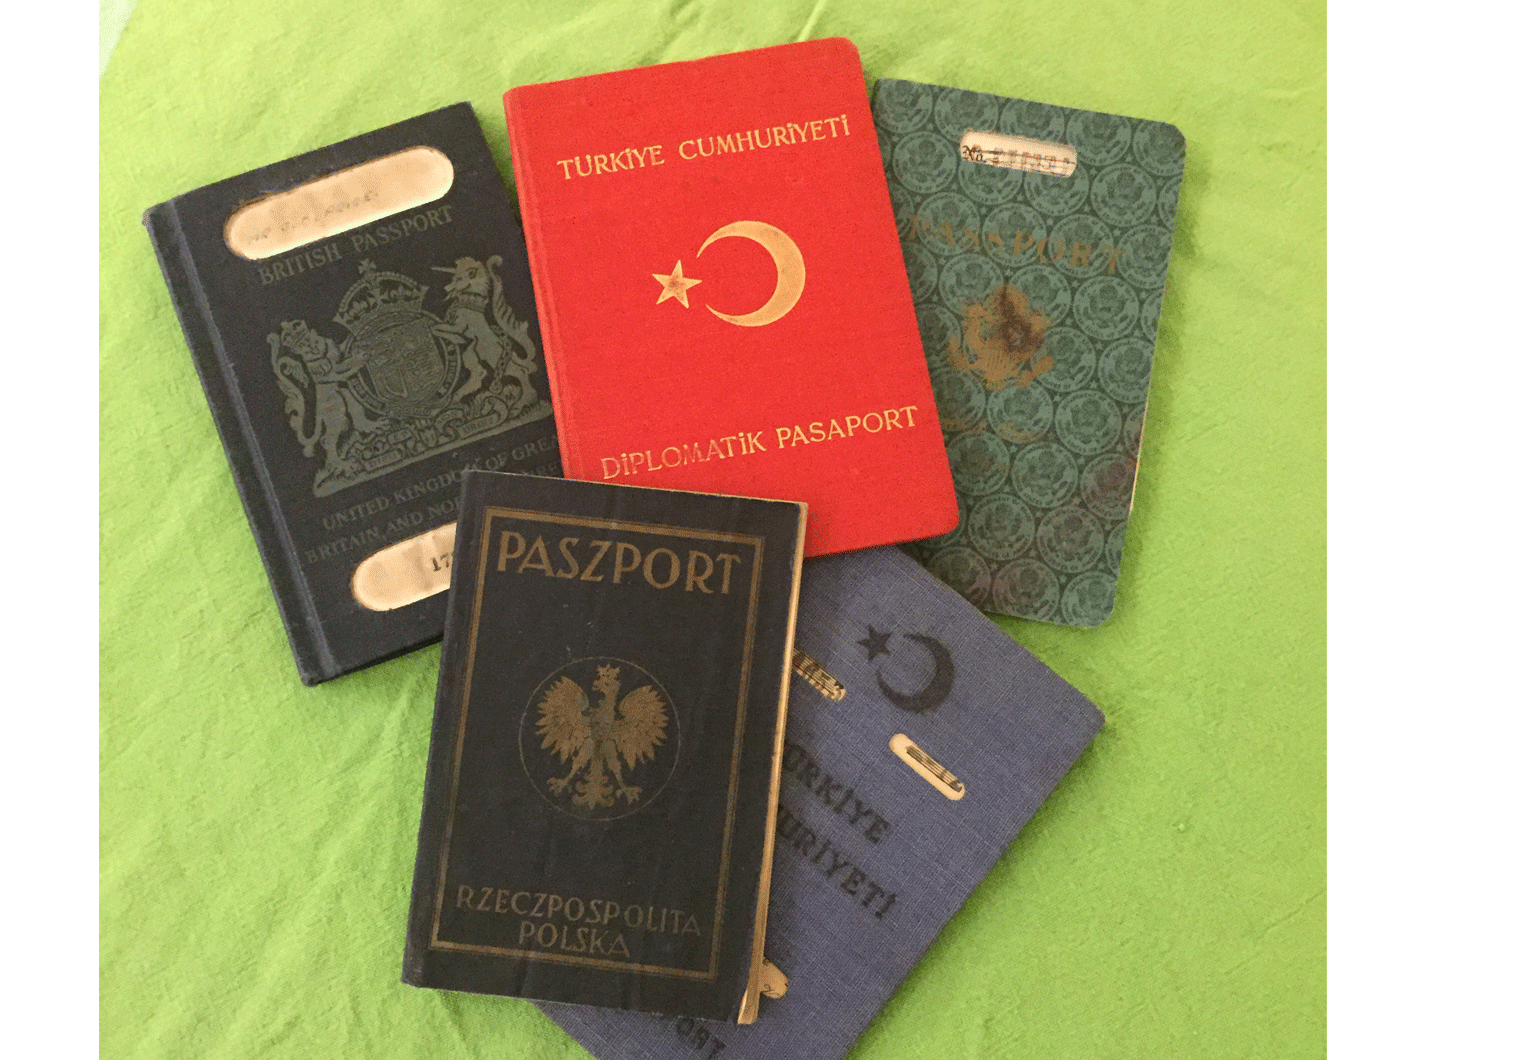 photos of old passports